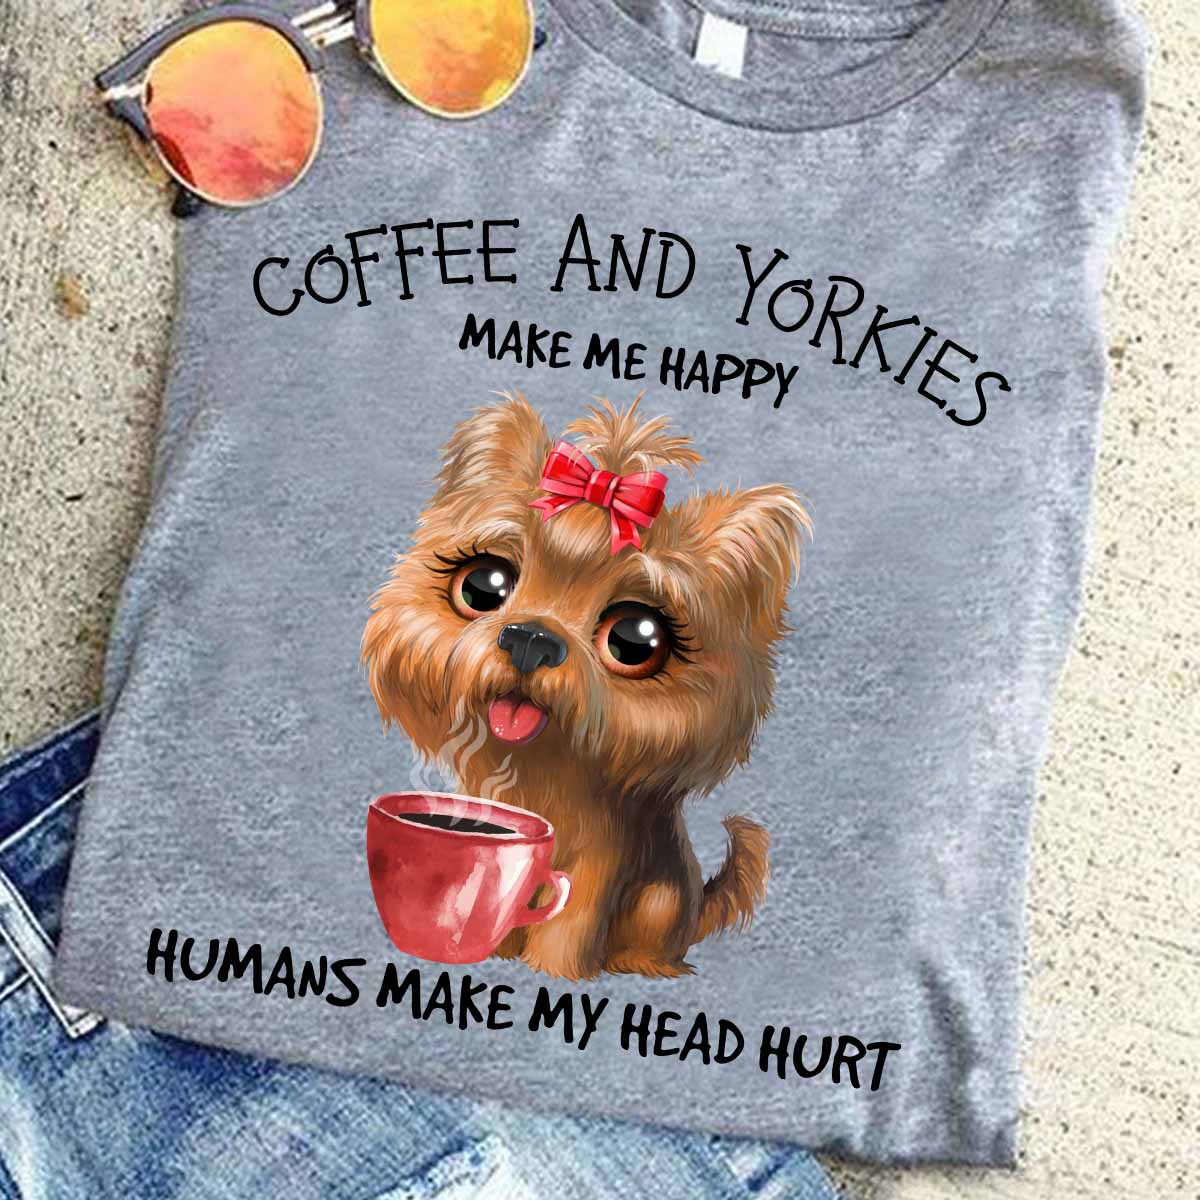 Coffee and yorkies make me happy humans make my head hurt